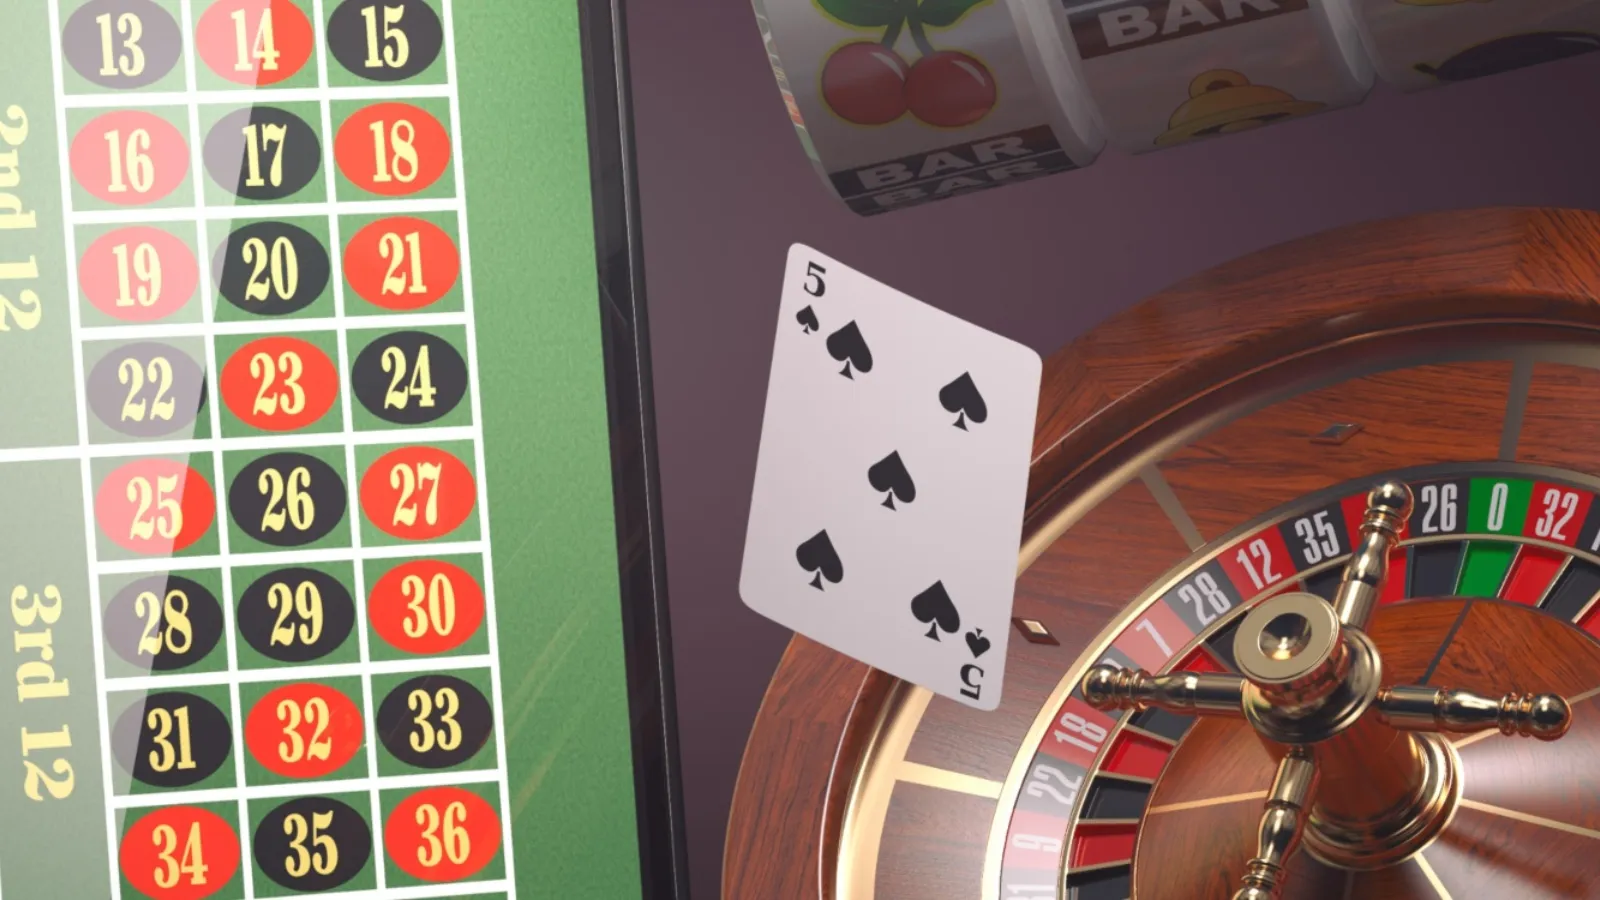 BetMGM Casino PA Bonus Code BOOKIES: Claim Up to $1K Deposit Match + $25 Extra